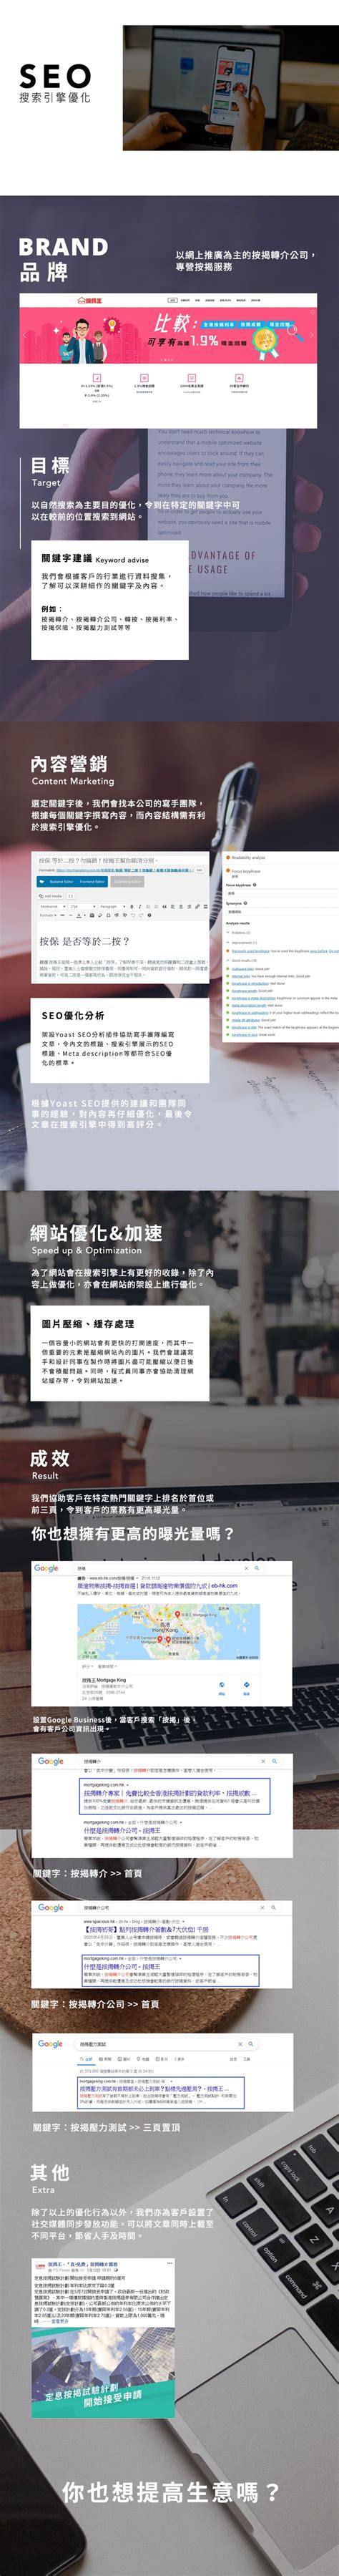 網頁SEO優化 按揭王 - 網頁設計 - Hong Kong Wordpress